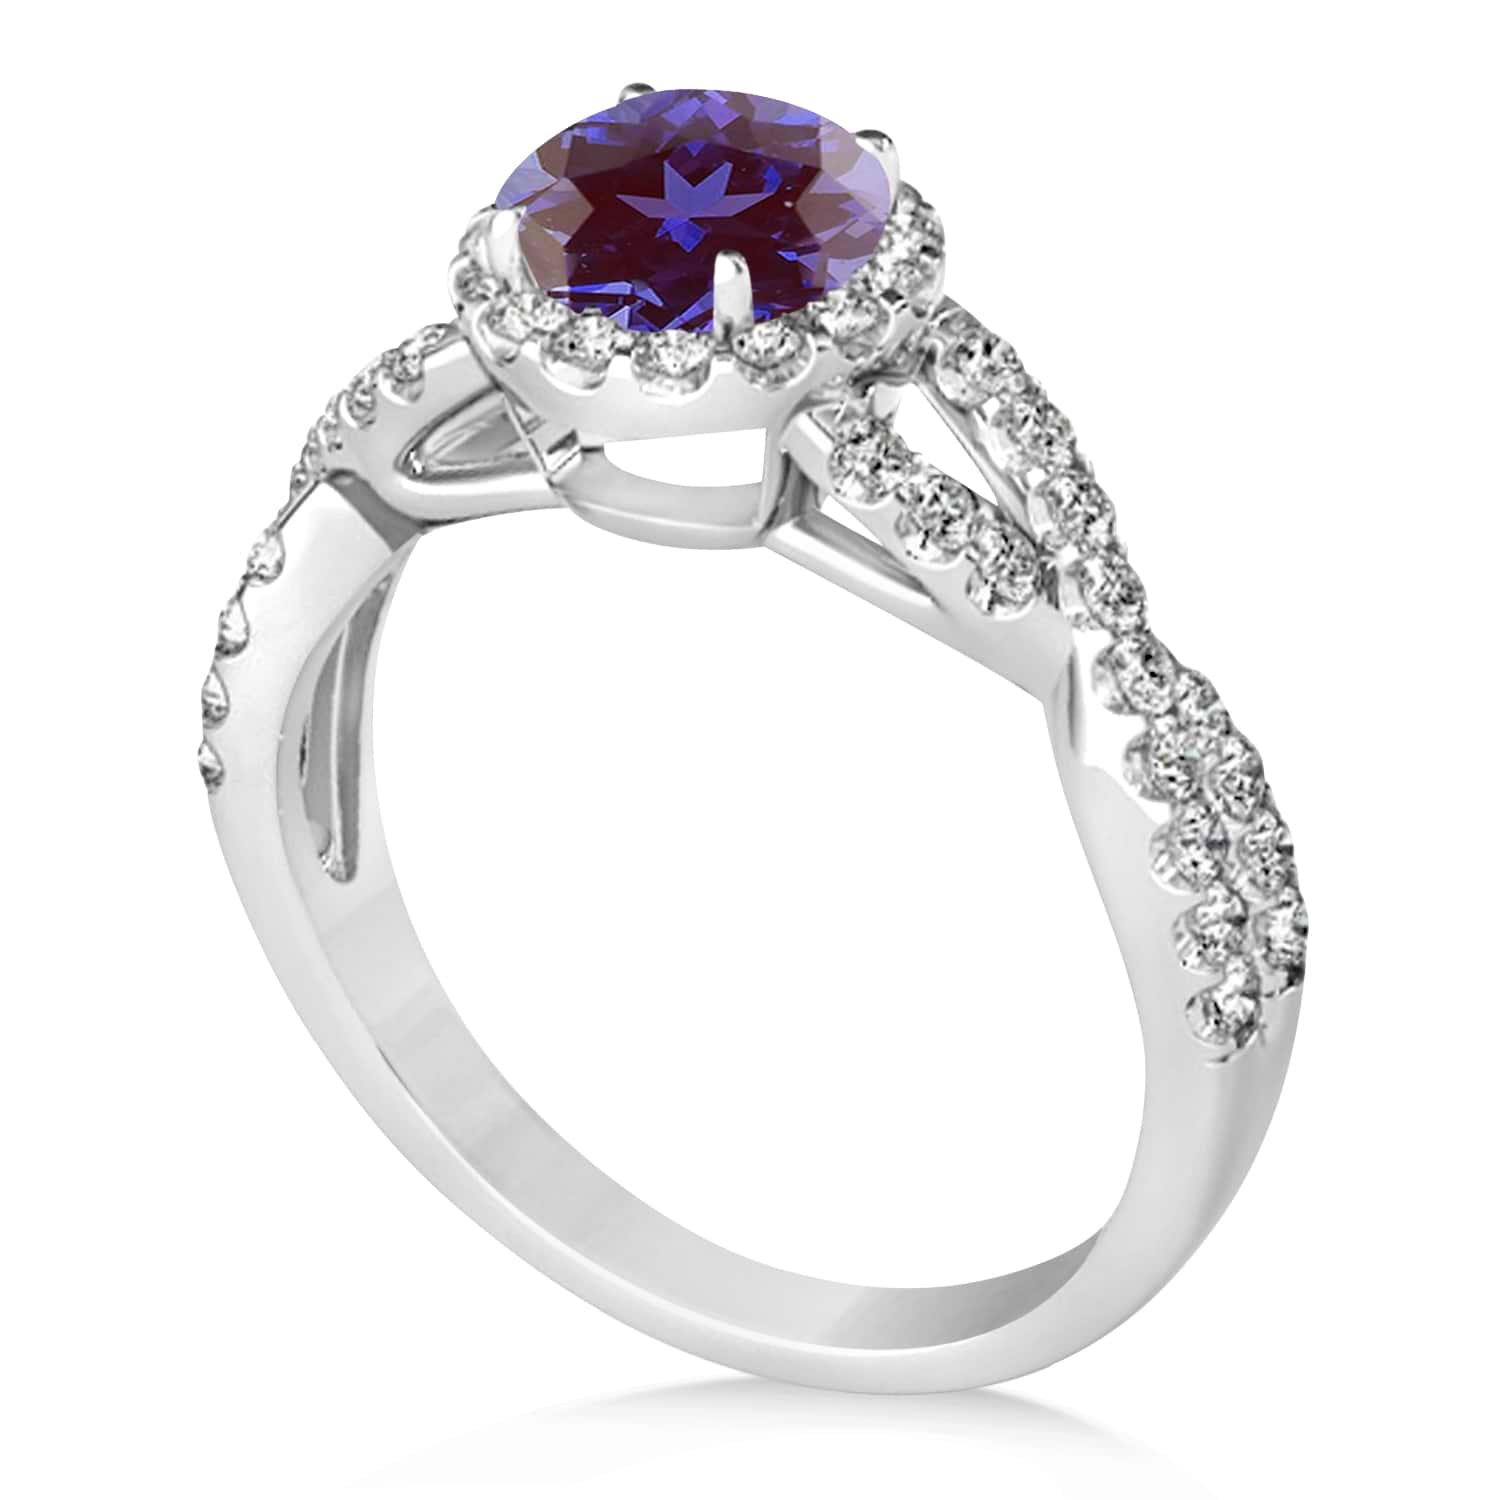 Alexandrite & Diamond Twisted Engagement Ring 14k White Gold 1.80ct